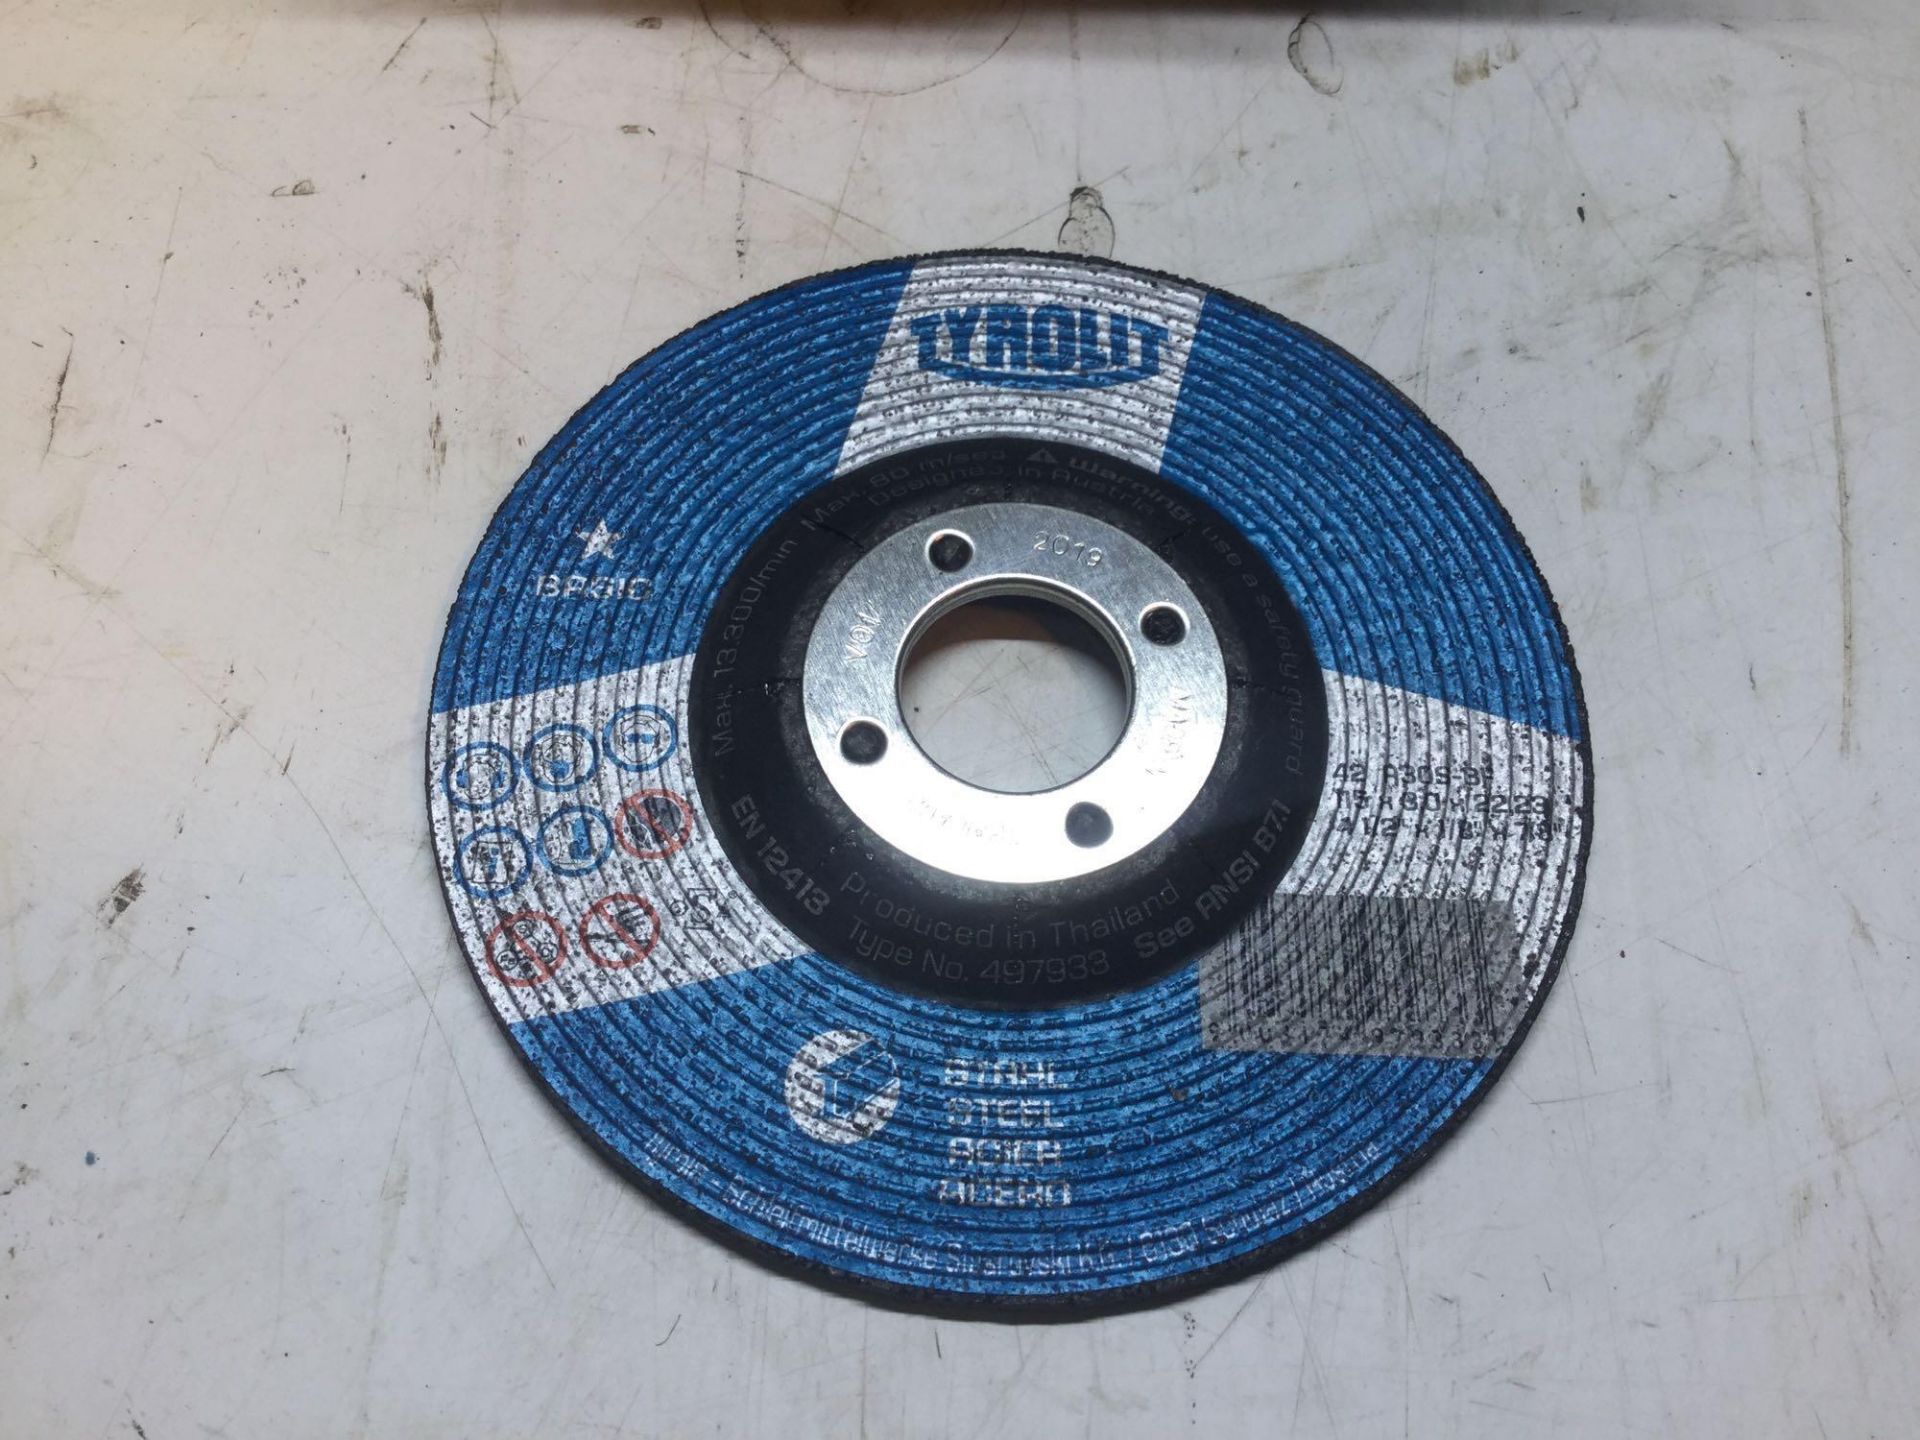 Tyrolit 115mm Cut Off Discs - Image 3 of 3